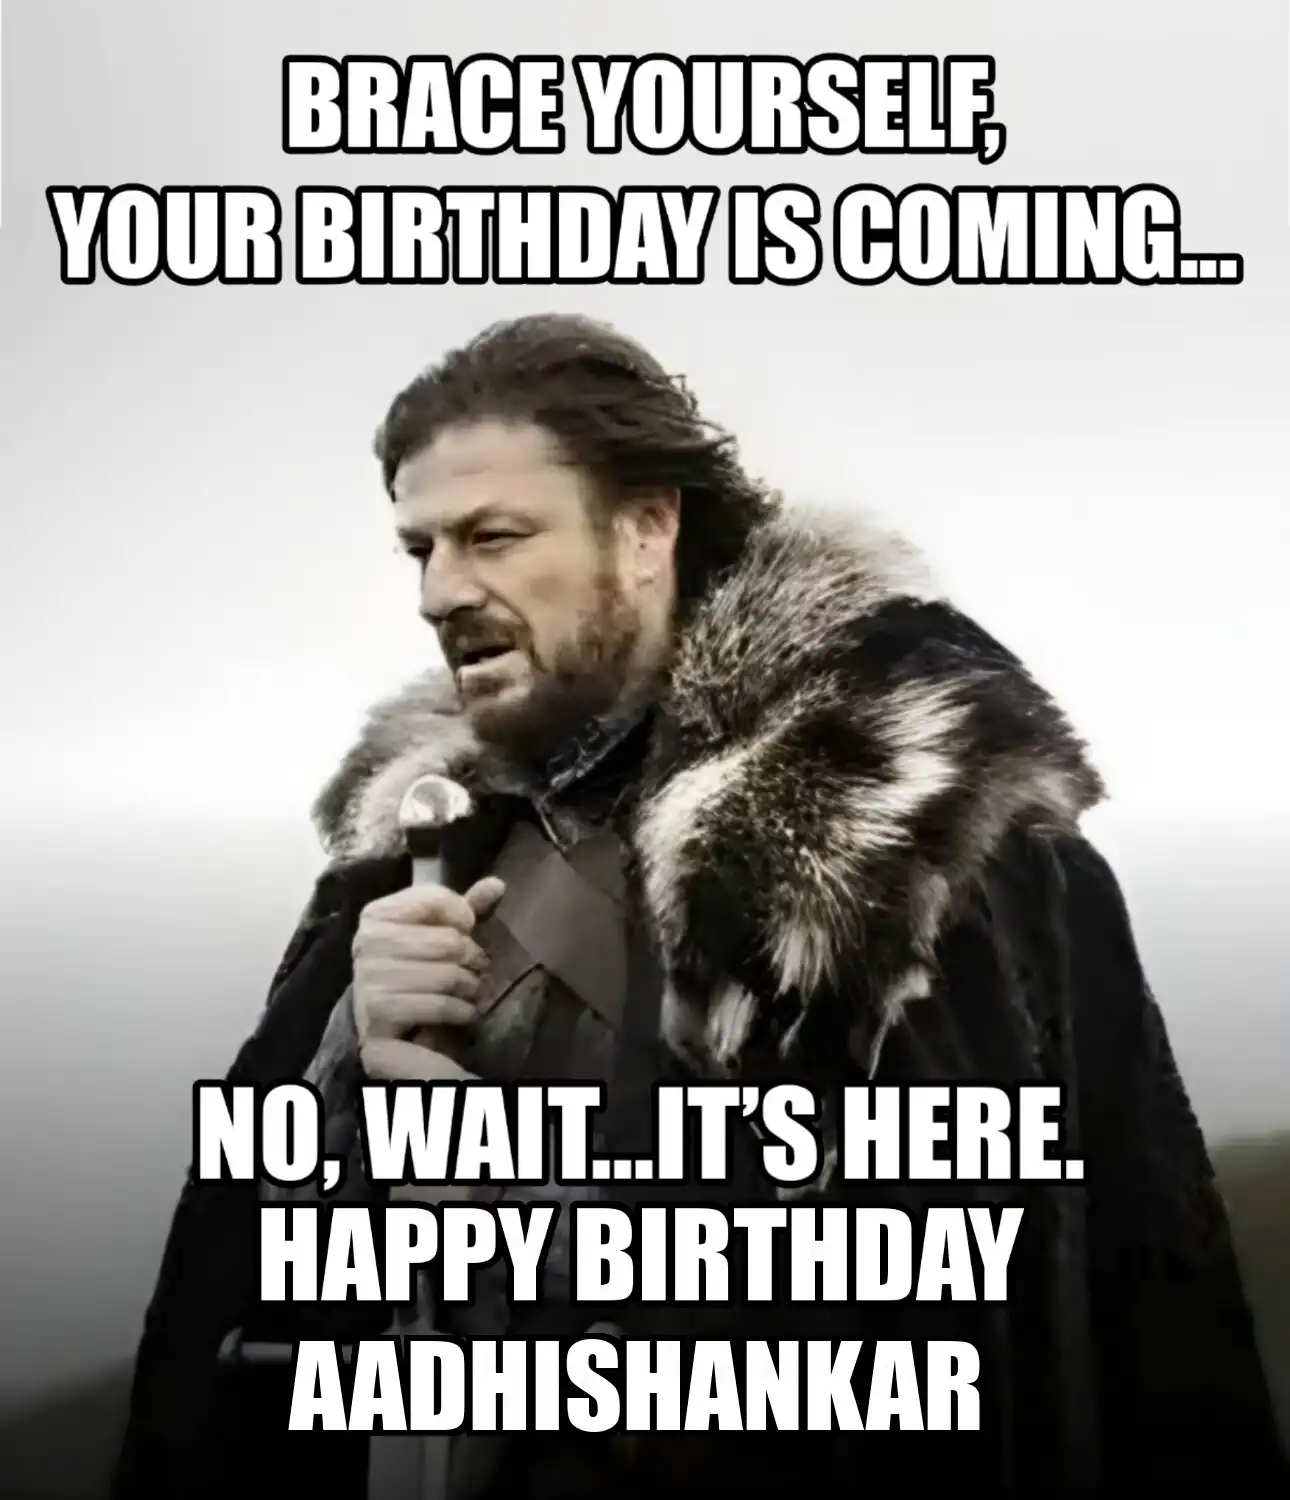 Happy Birthday Aadhishankar Brace Yourself Your Birthday Is Coming Meme